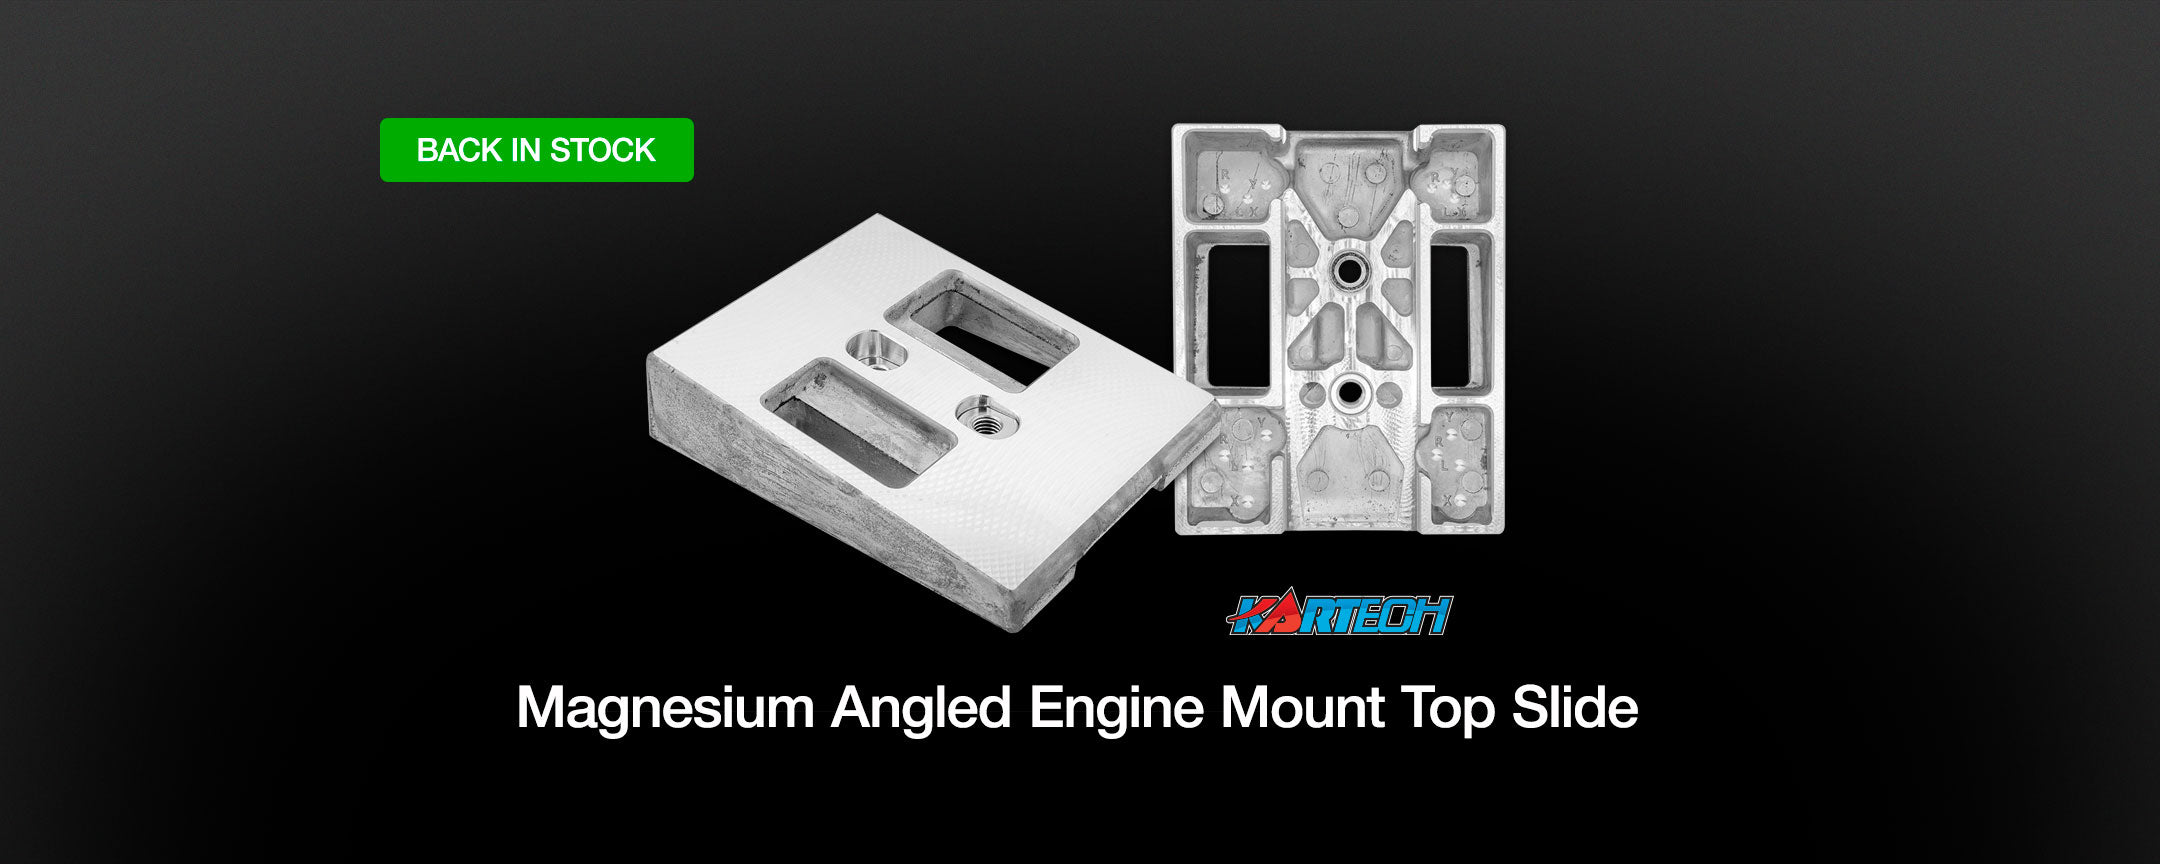 Go Kart Engine Mount Top Slide Magnesium